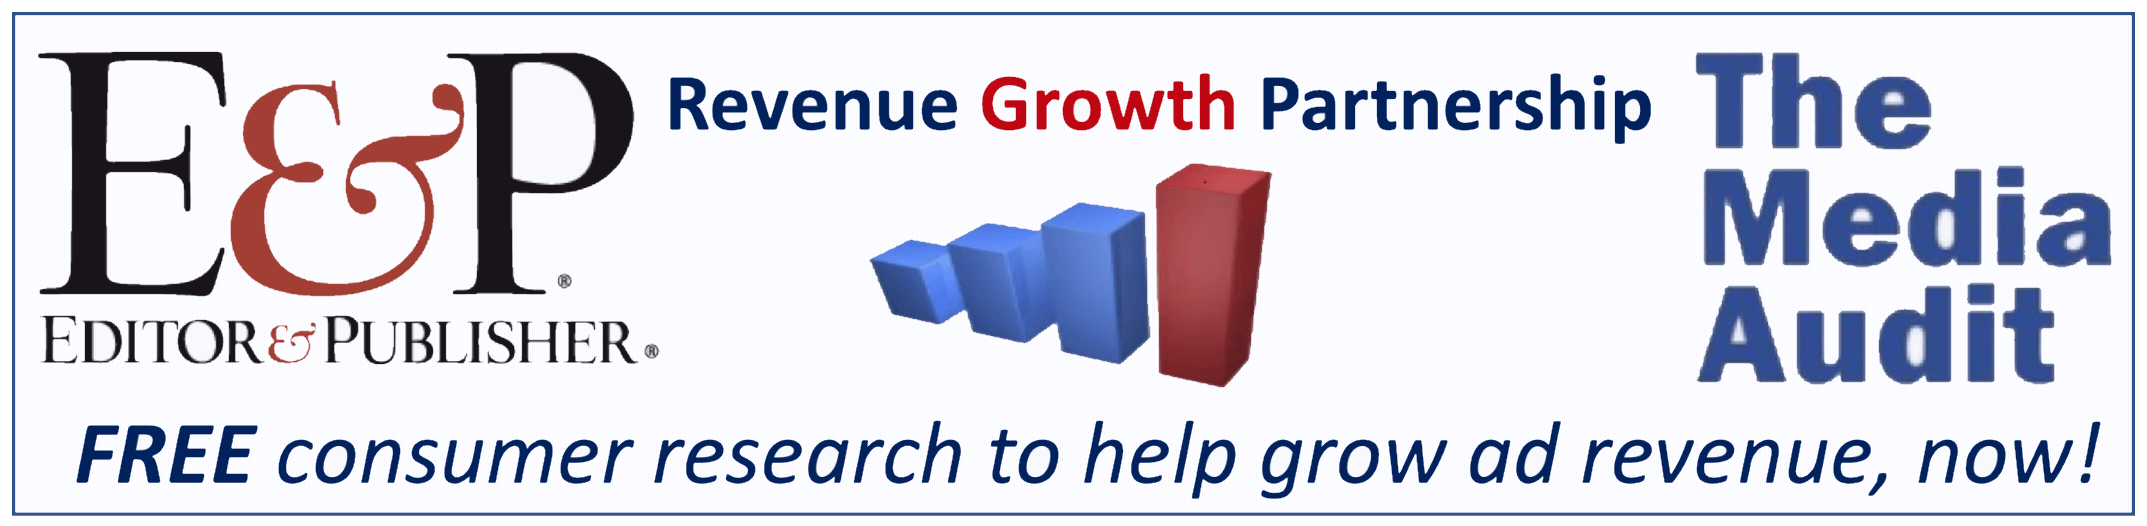 revenue growth partnership